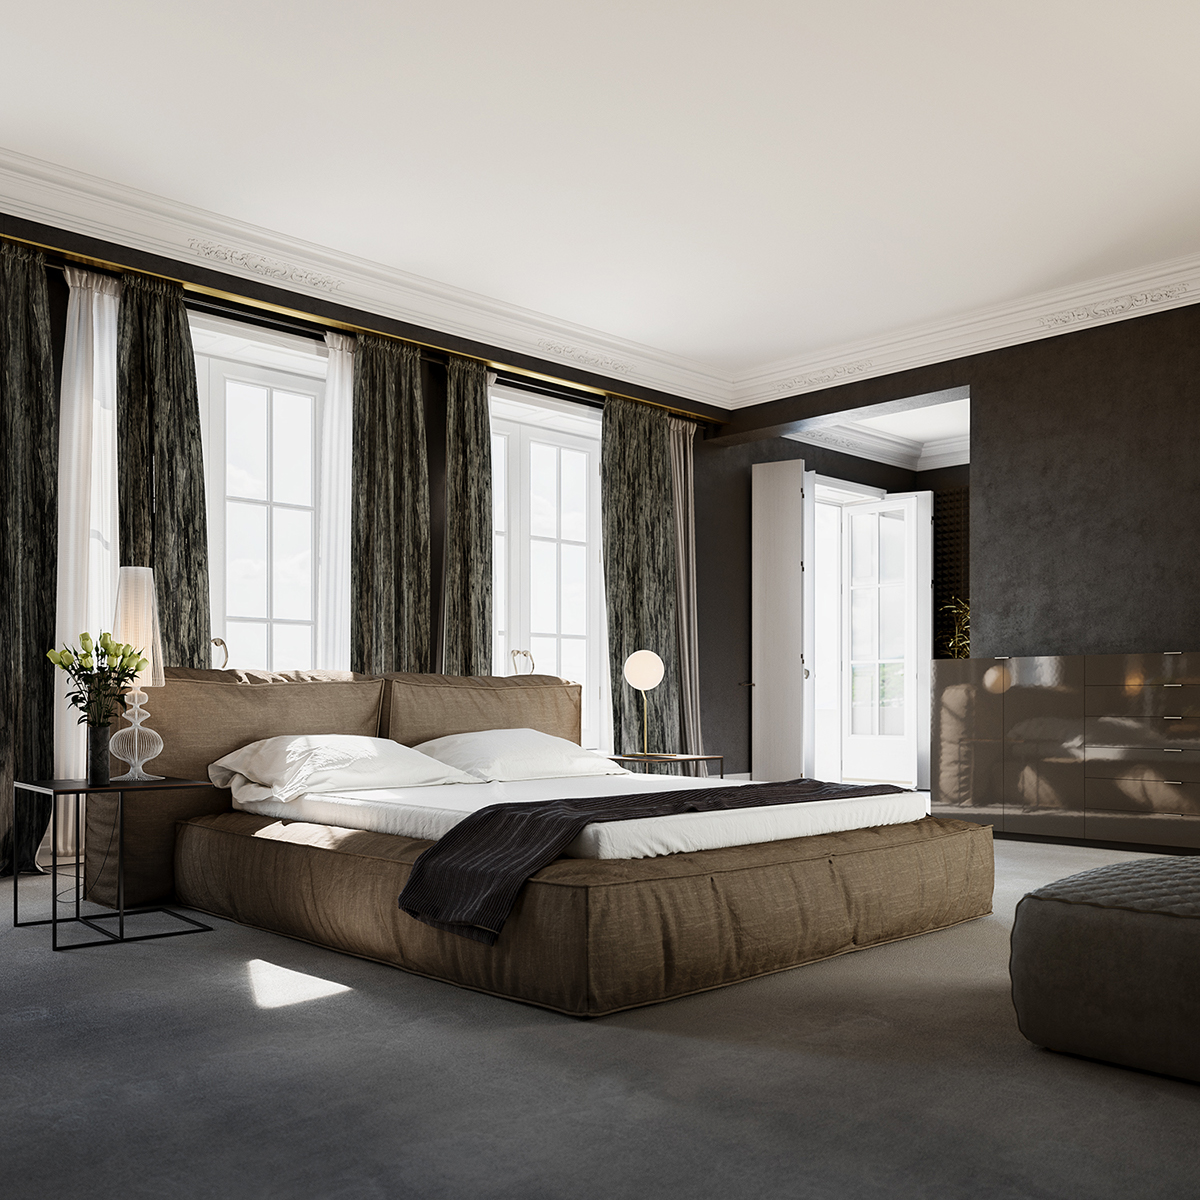 cote d'azur bedroom Interior bed linen bright vray Vizualization Render design Master house furniture modern eclectic